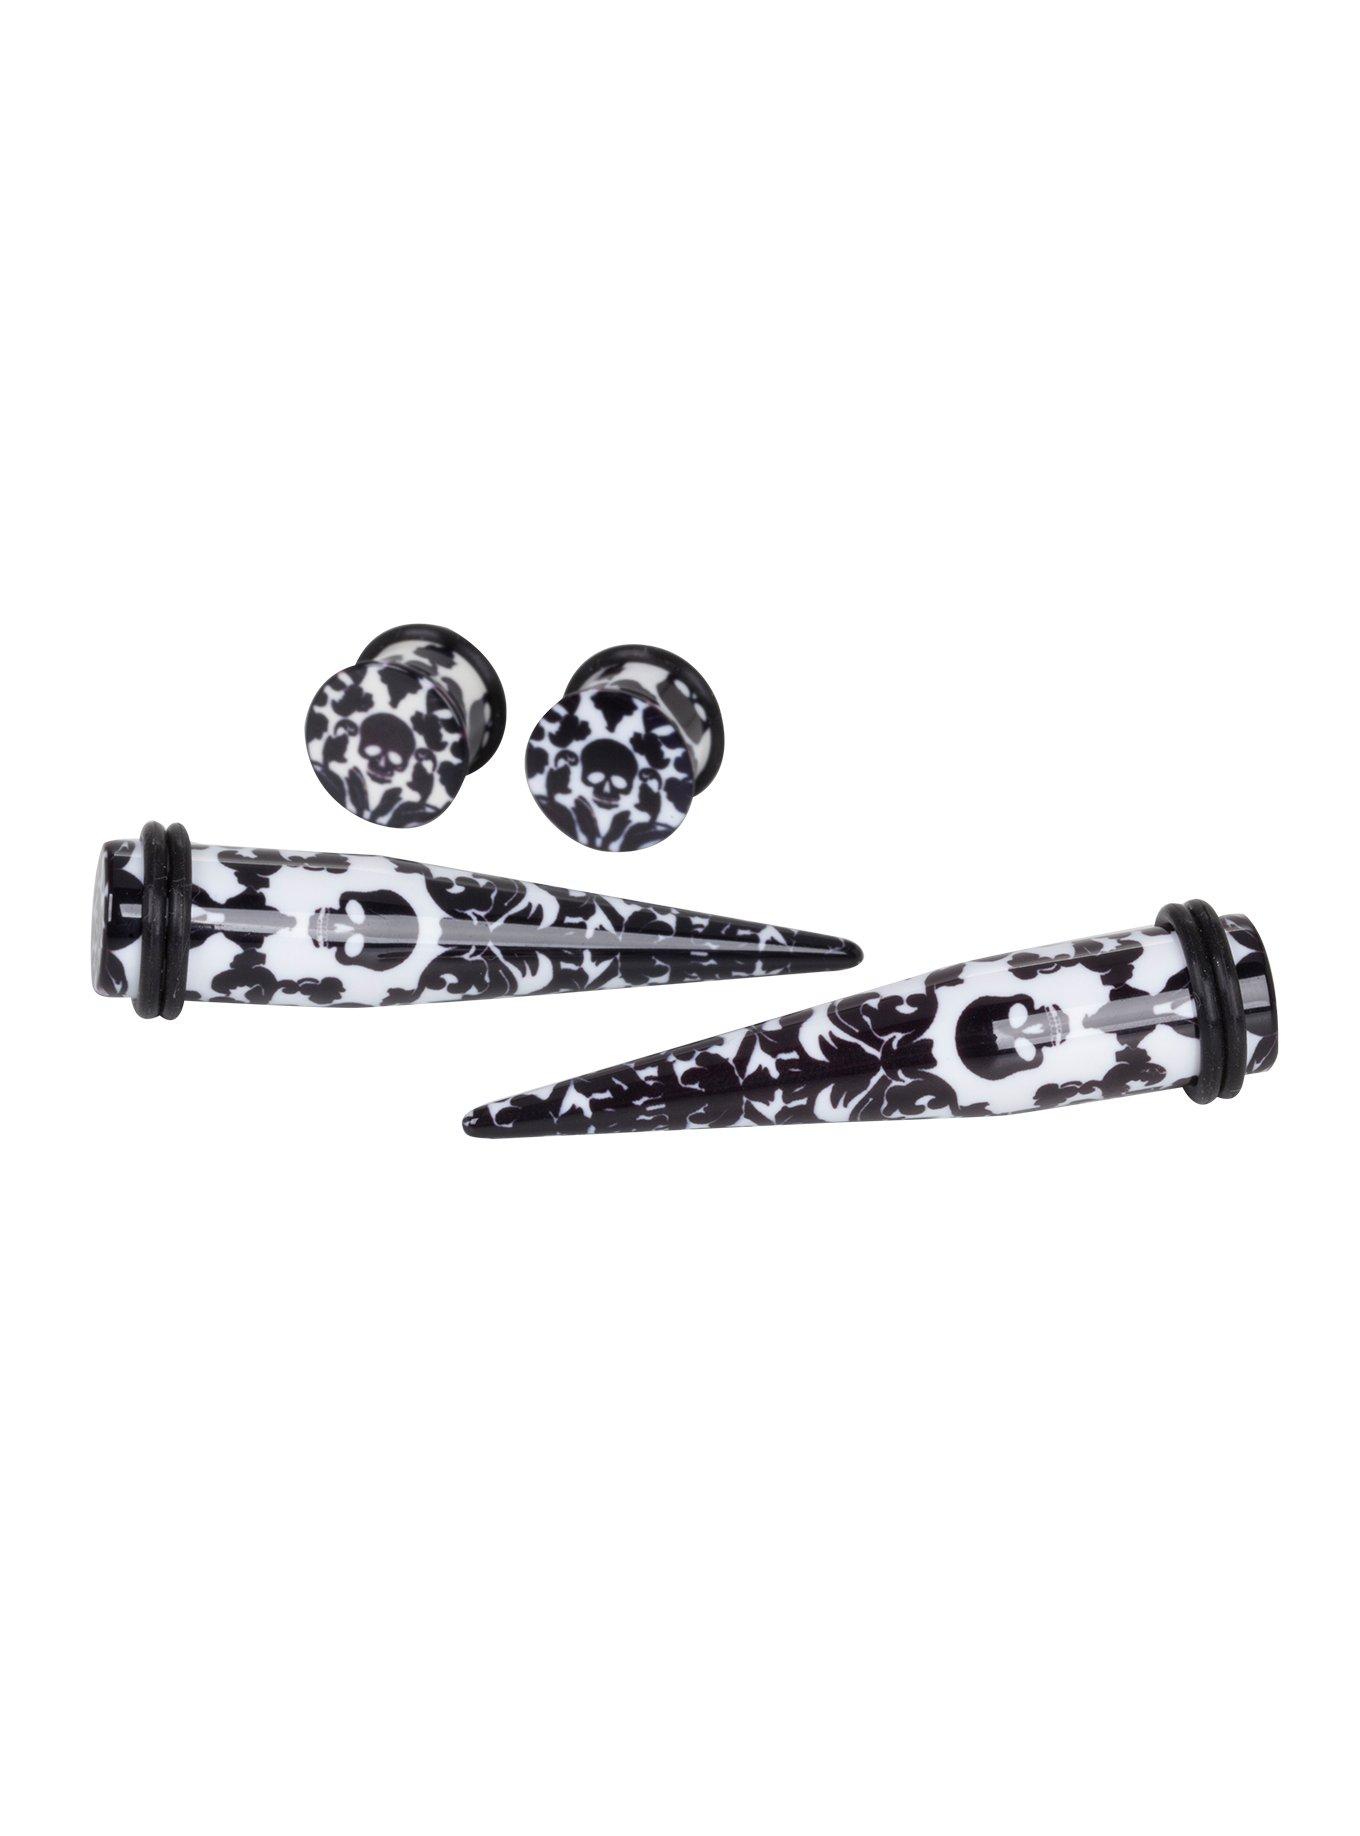 Acrylic Black & White Skull Filigree Plug & Taper 4 Pack, BLACK, hi-res